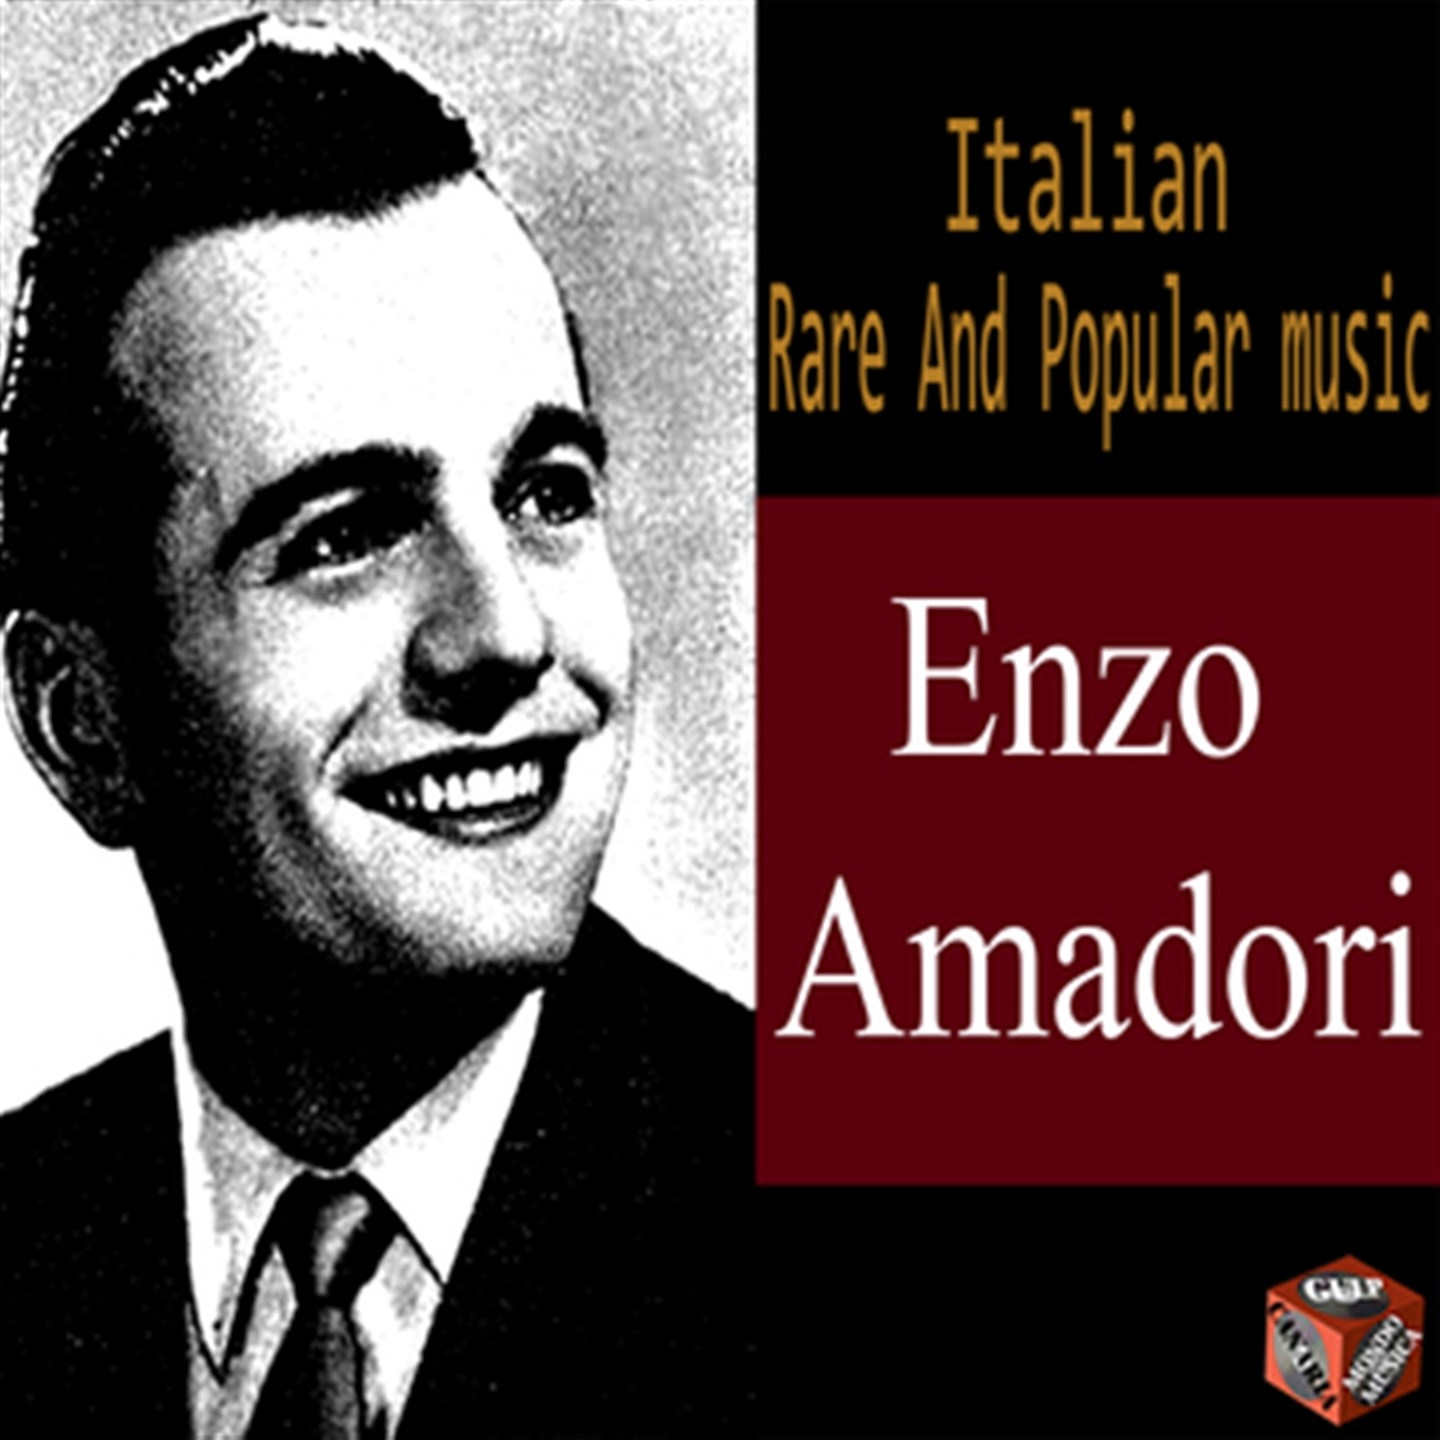 Rare and popular music italy enzo amadori